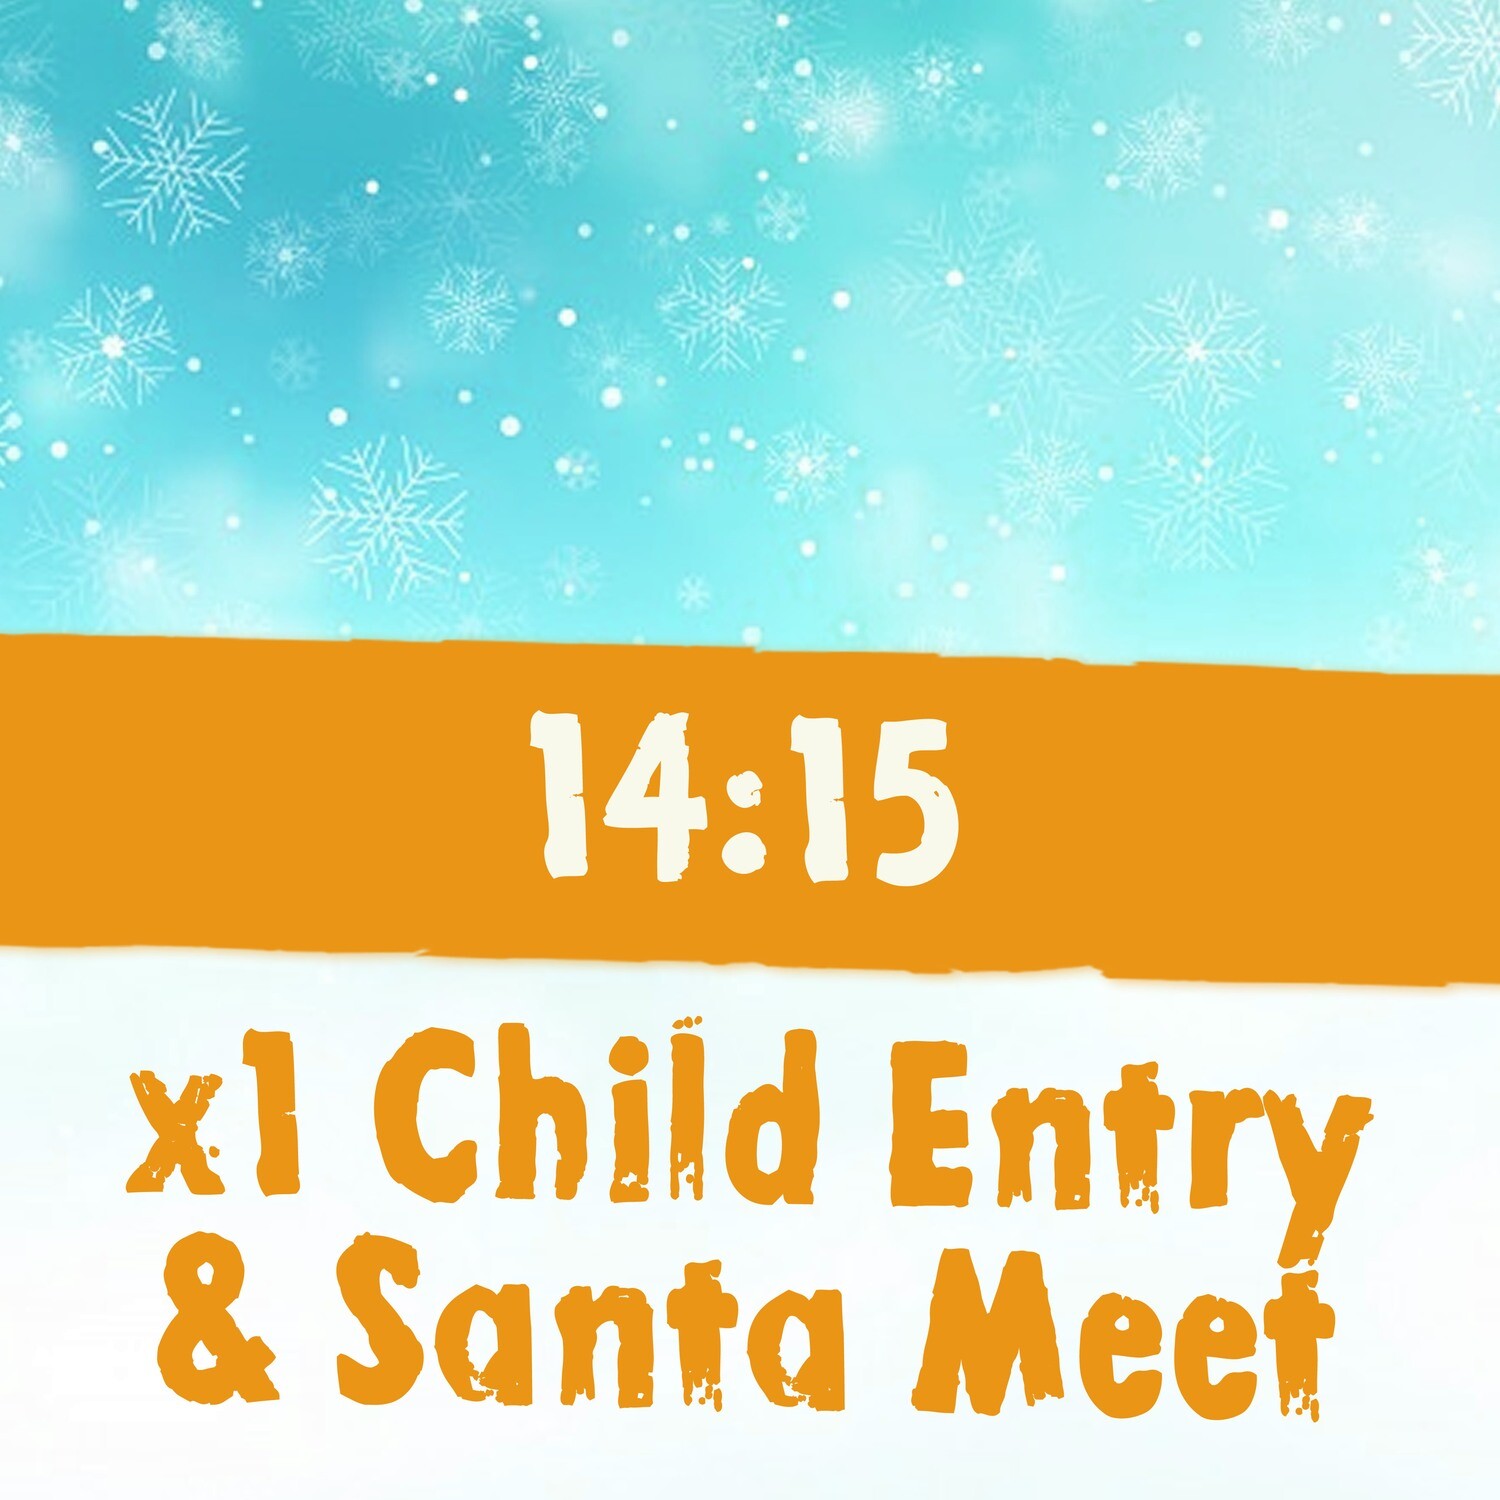 x1 Child Admission + Santa Meet 22nd Dec / 14:15